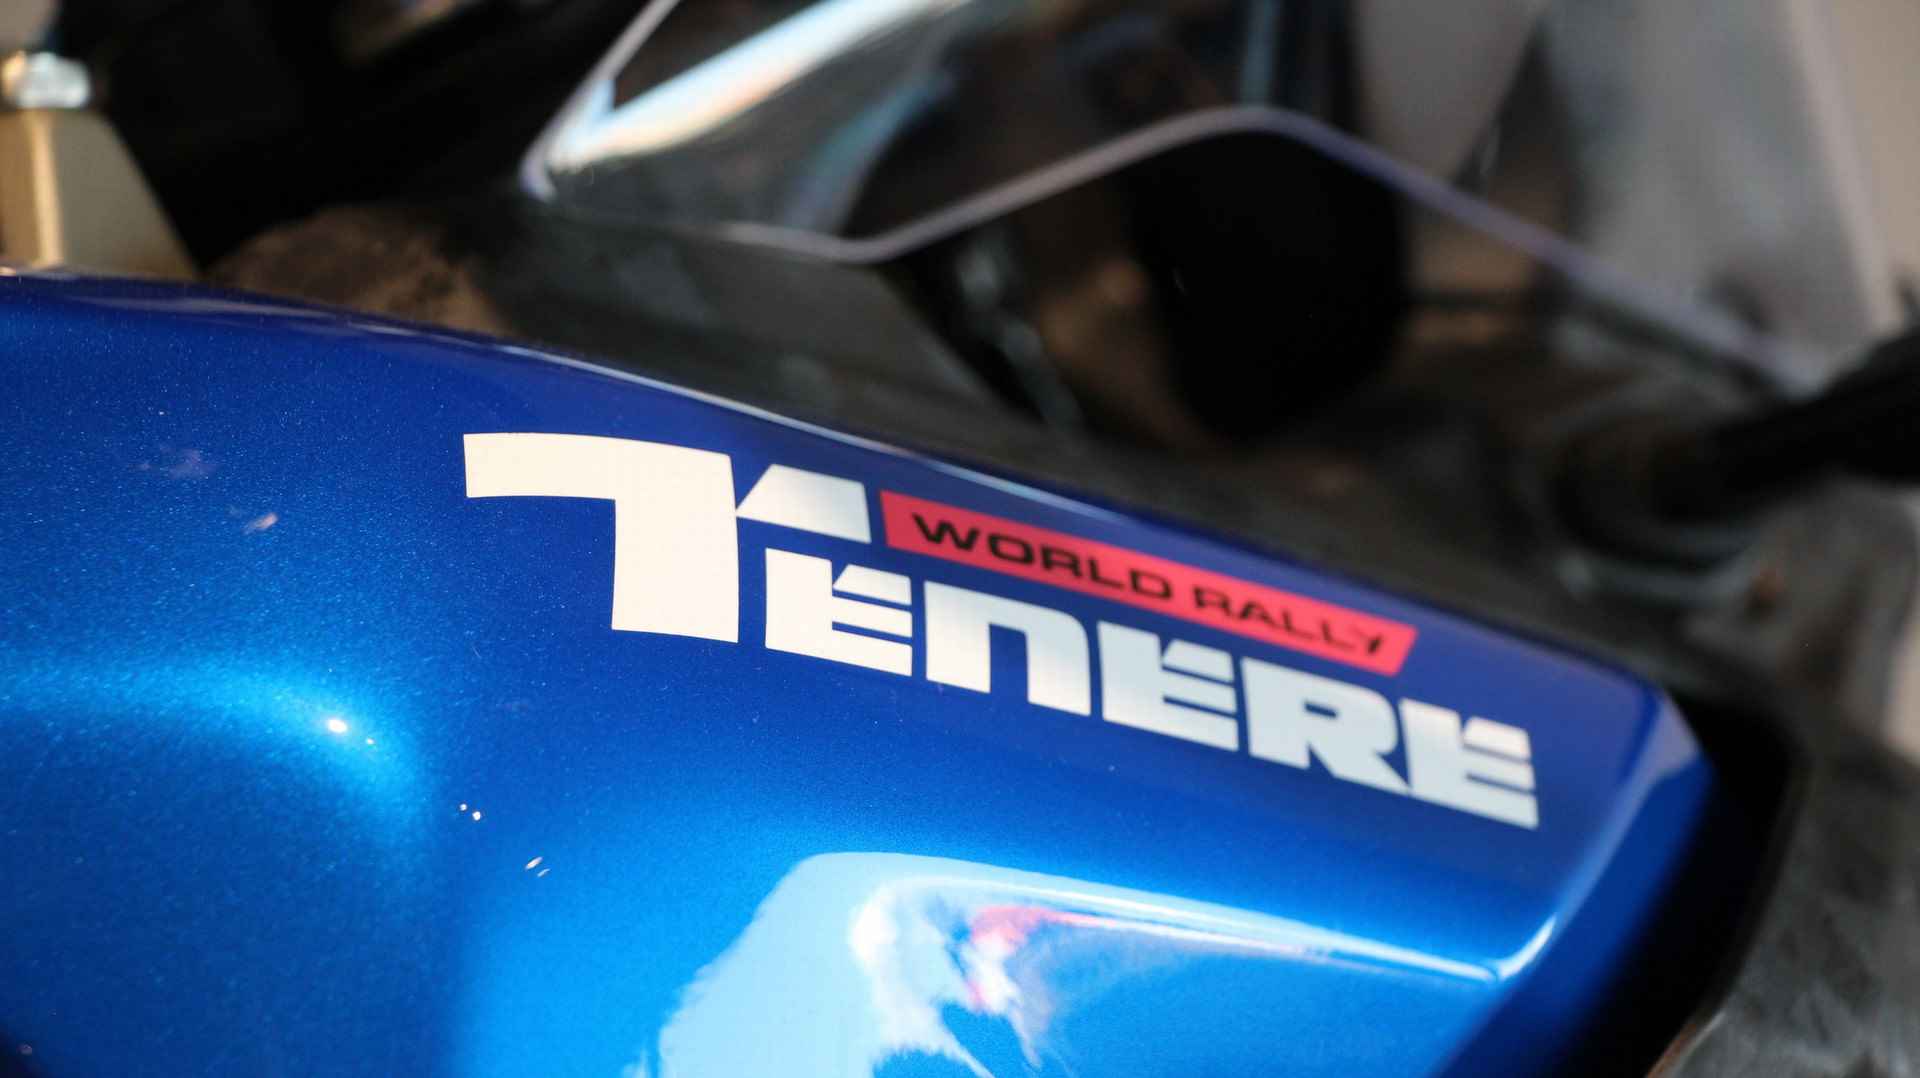 Yamaha TENERE WORLD RALLY LET OP NU 1500,- INRUIL VOORDEEL - 12/23